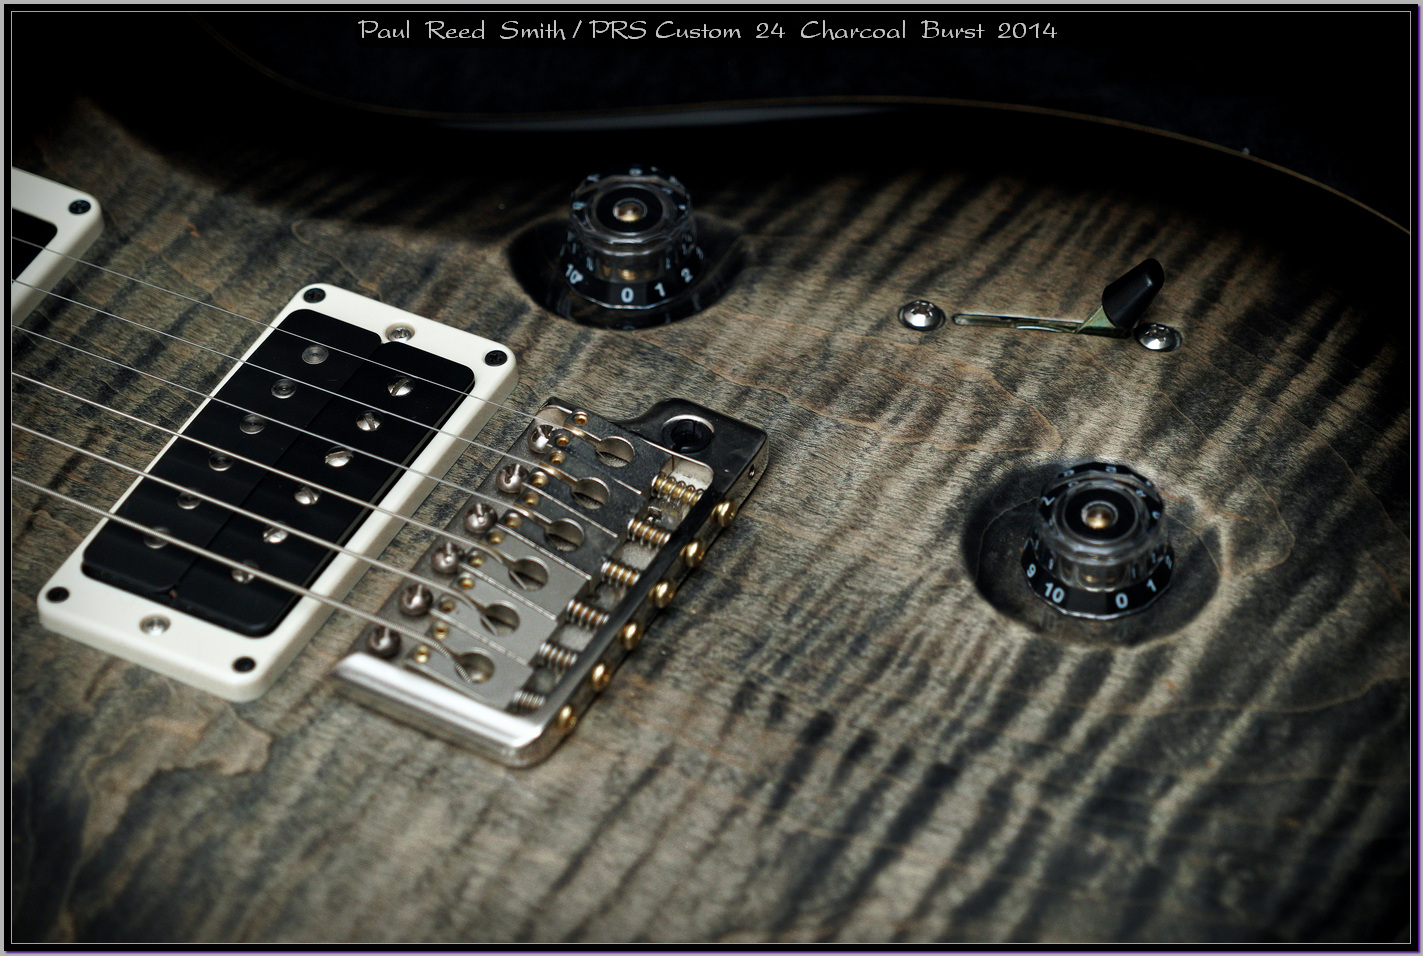 PRS Paul Reed Smith Custom 24 Charcoal Burst 2014 21_x1440.jpg